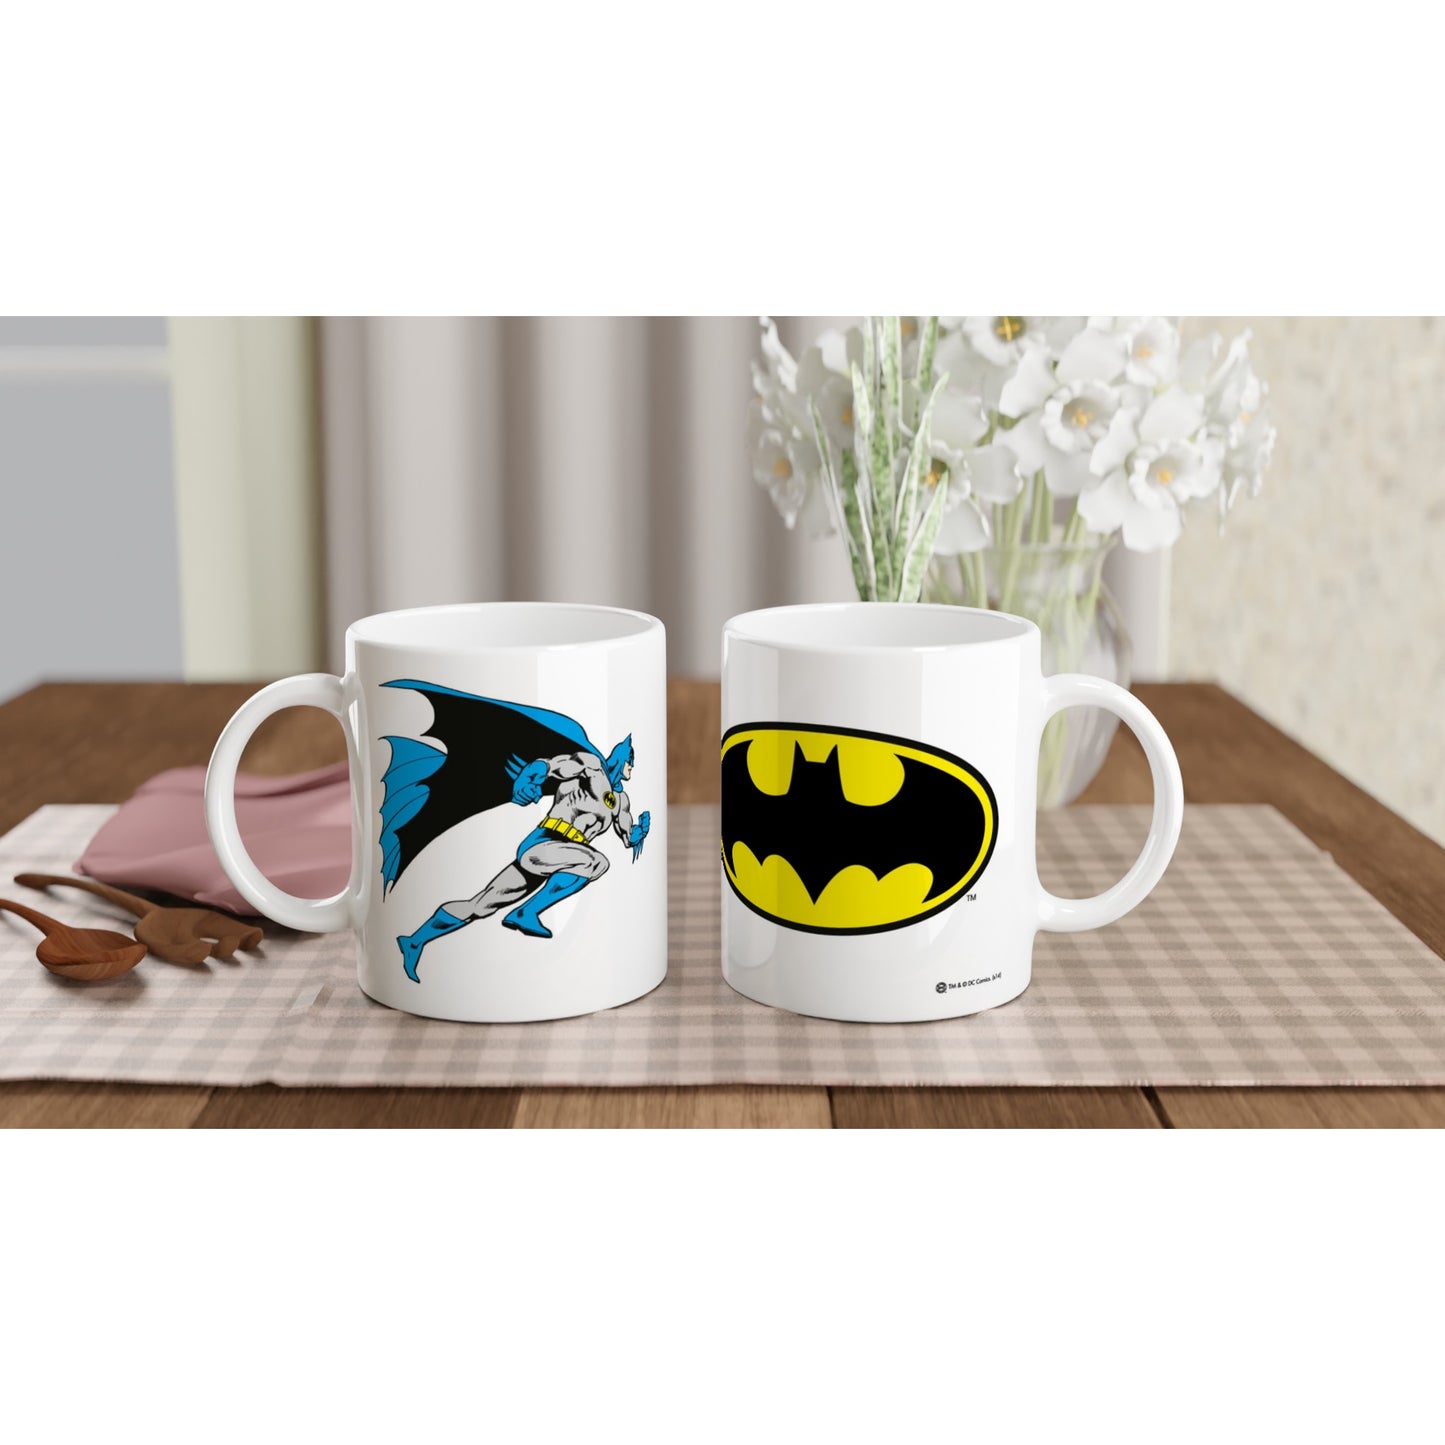 Offizielle DC Comics Tasse – Batman Classic – 330 ml weiße Tasse